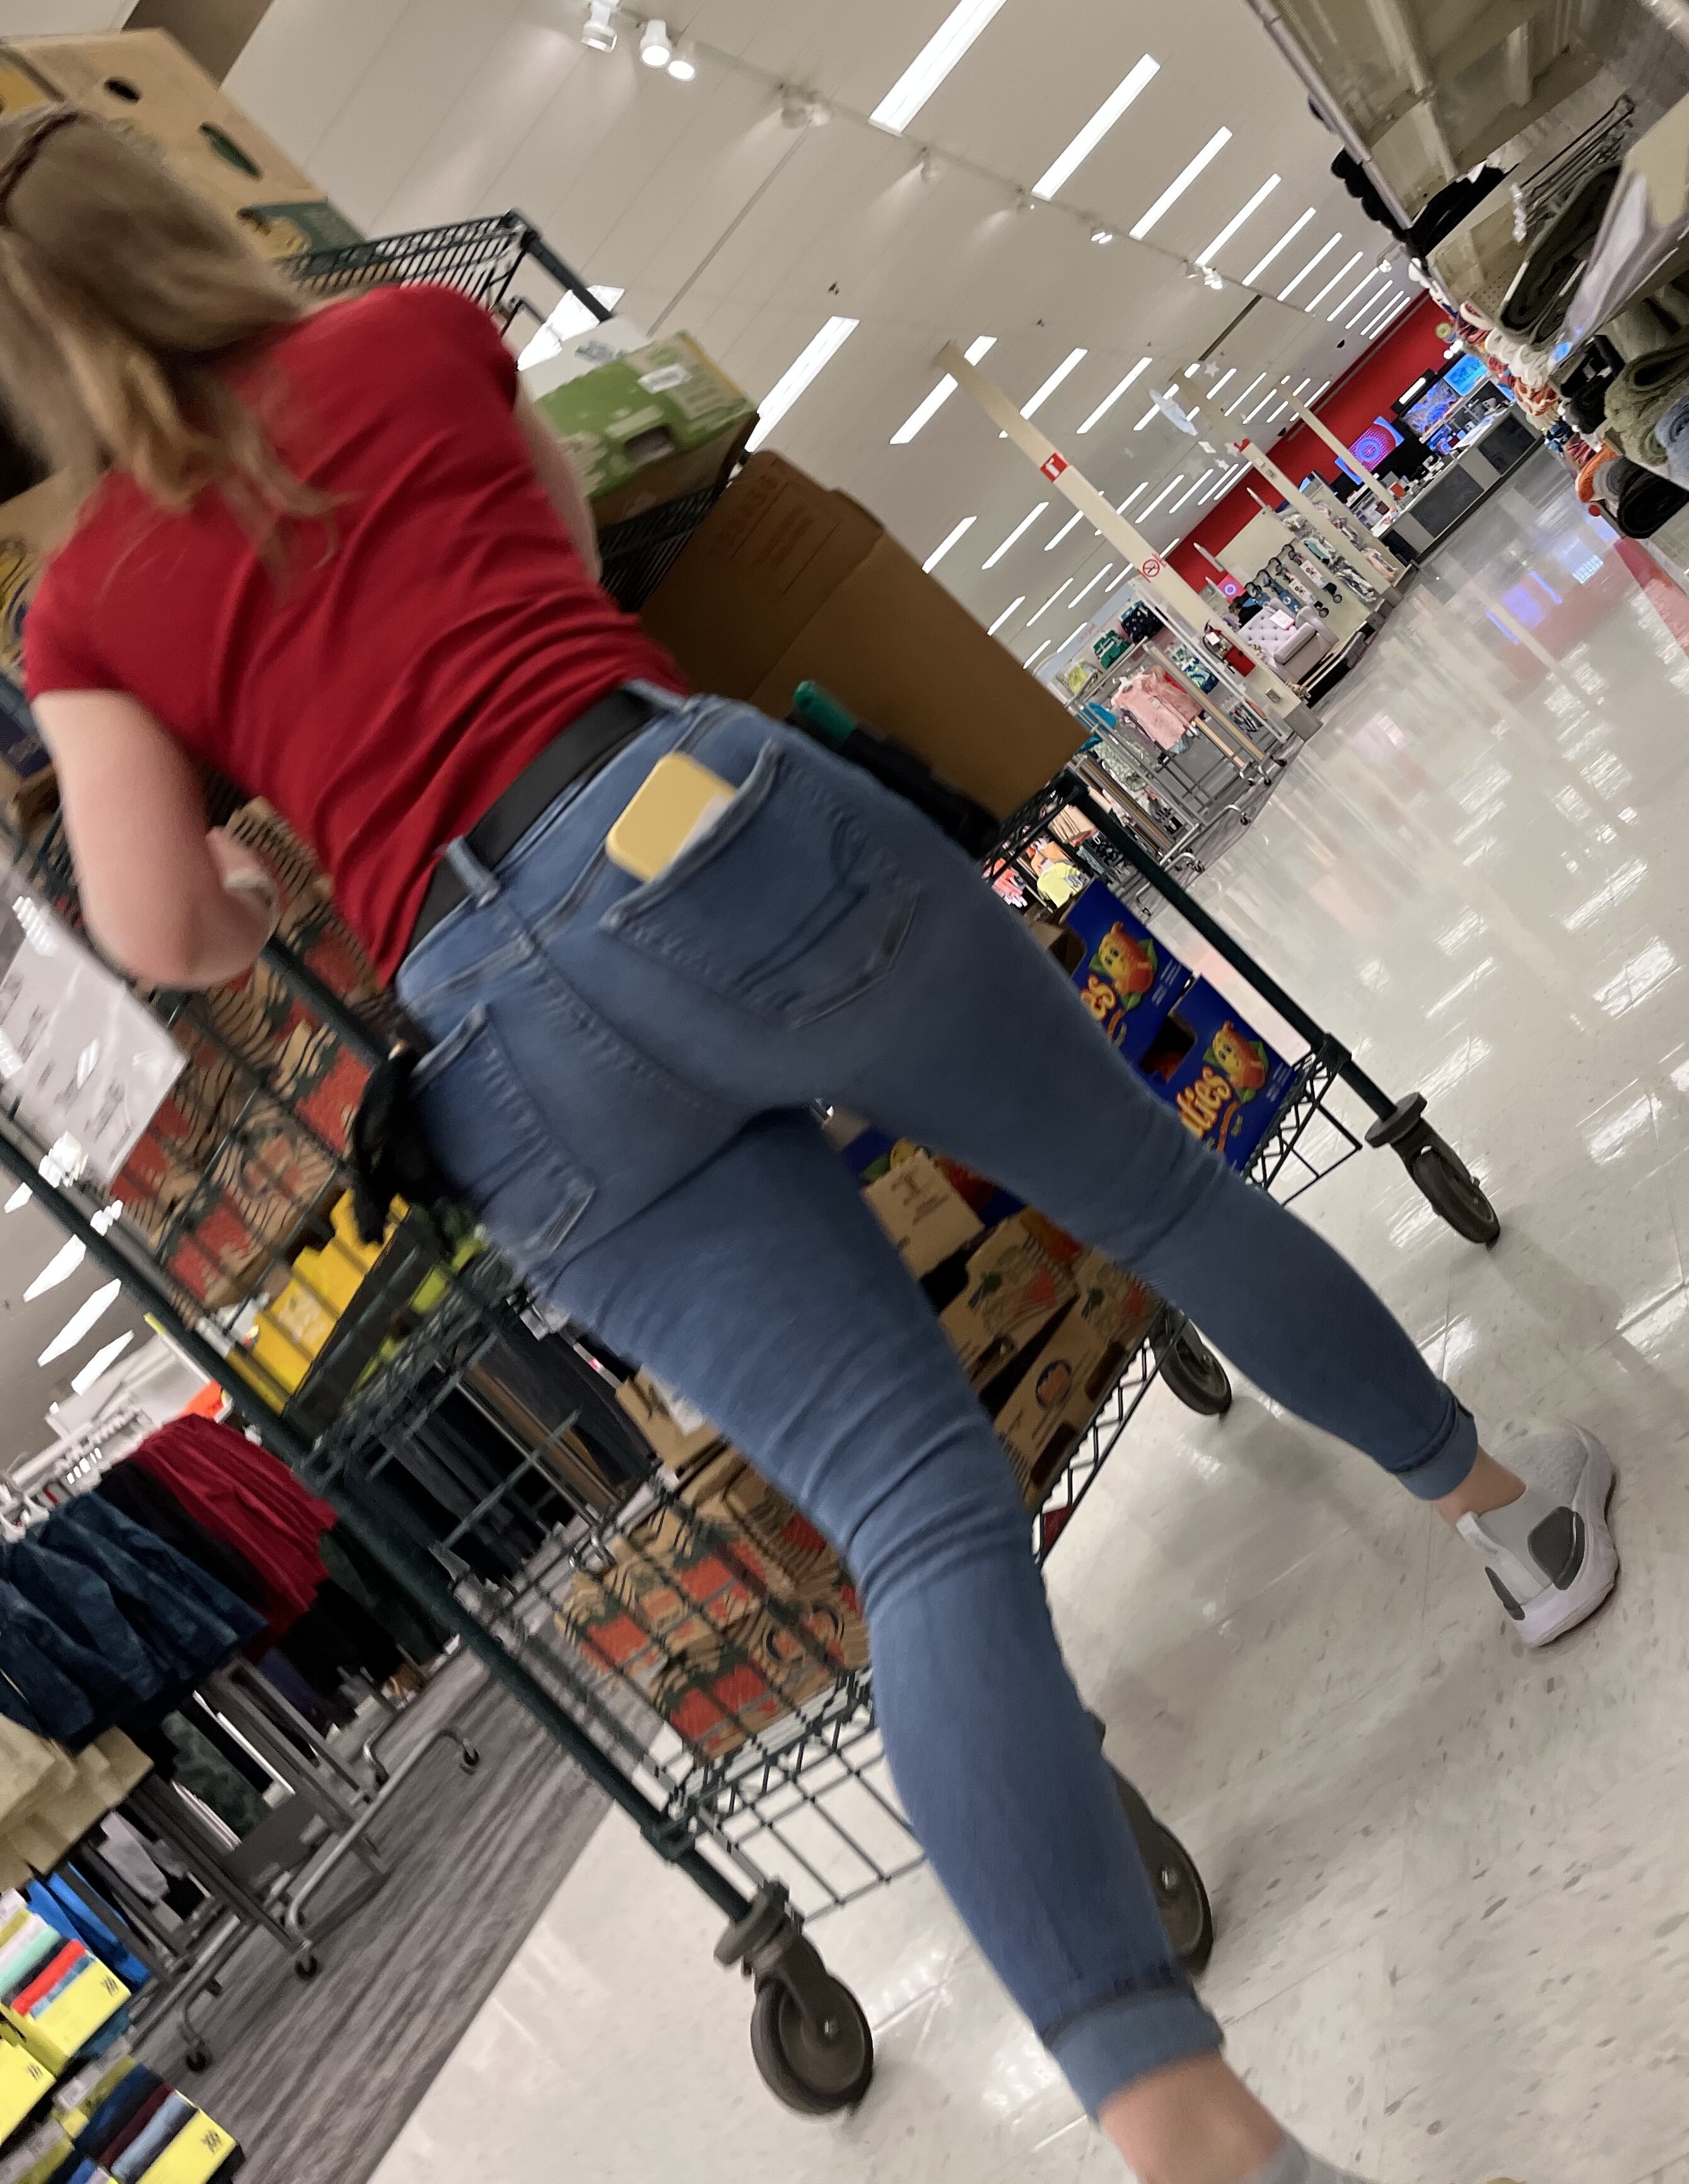 Slim body target worker 👀 - Tight Jeans - Forum